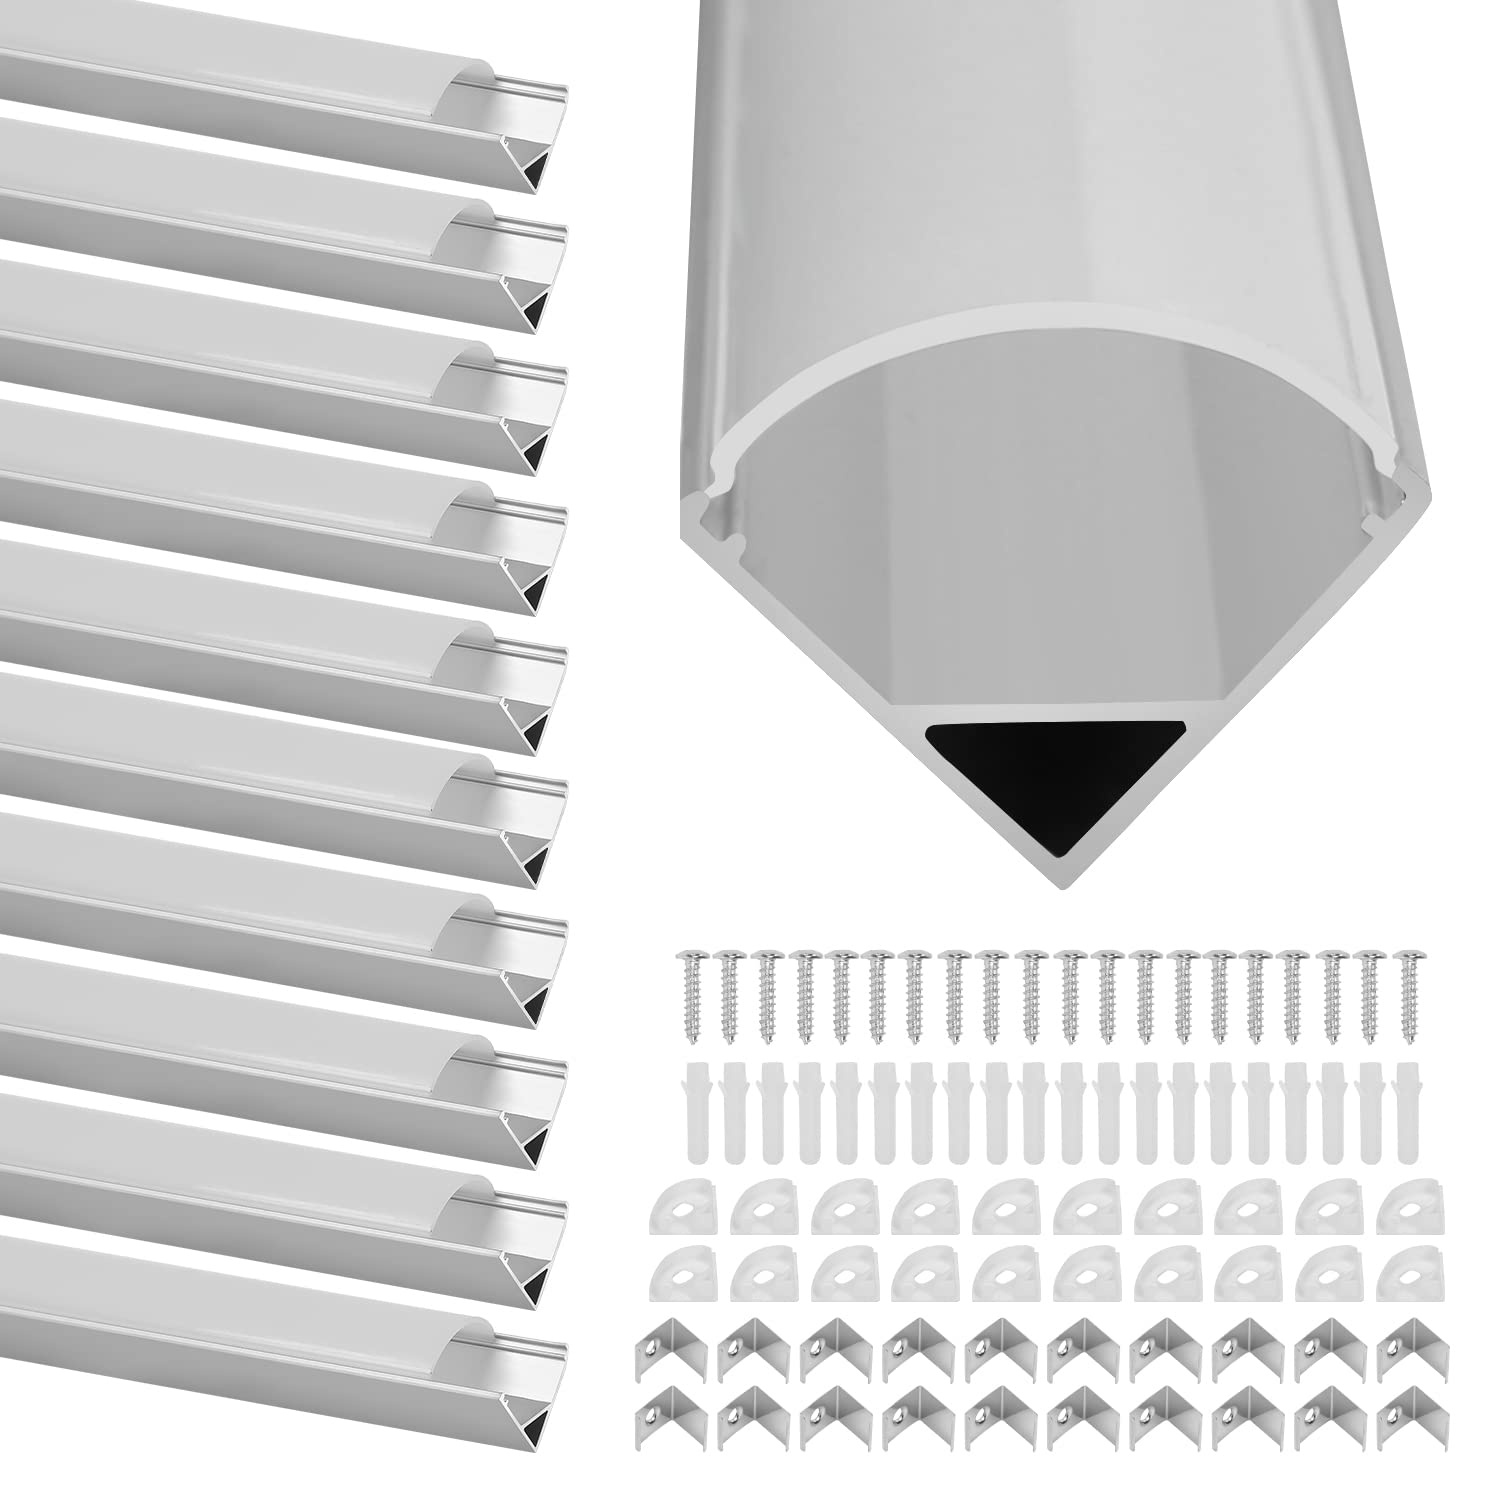 Gimisgu LED Profil Aluminium 1m 30 Pack V-Form Aluprofil für LED Stripe/Strip/Streifen/Band LED Aluminium Profil silber inkl. Abdeckung, Montageclips und Eckverbindern